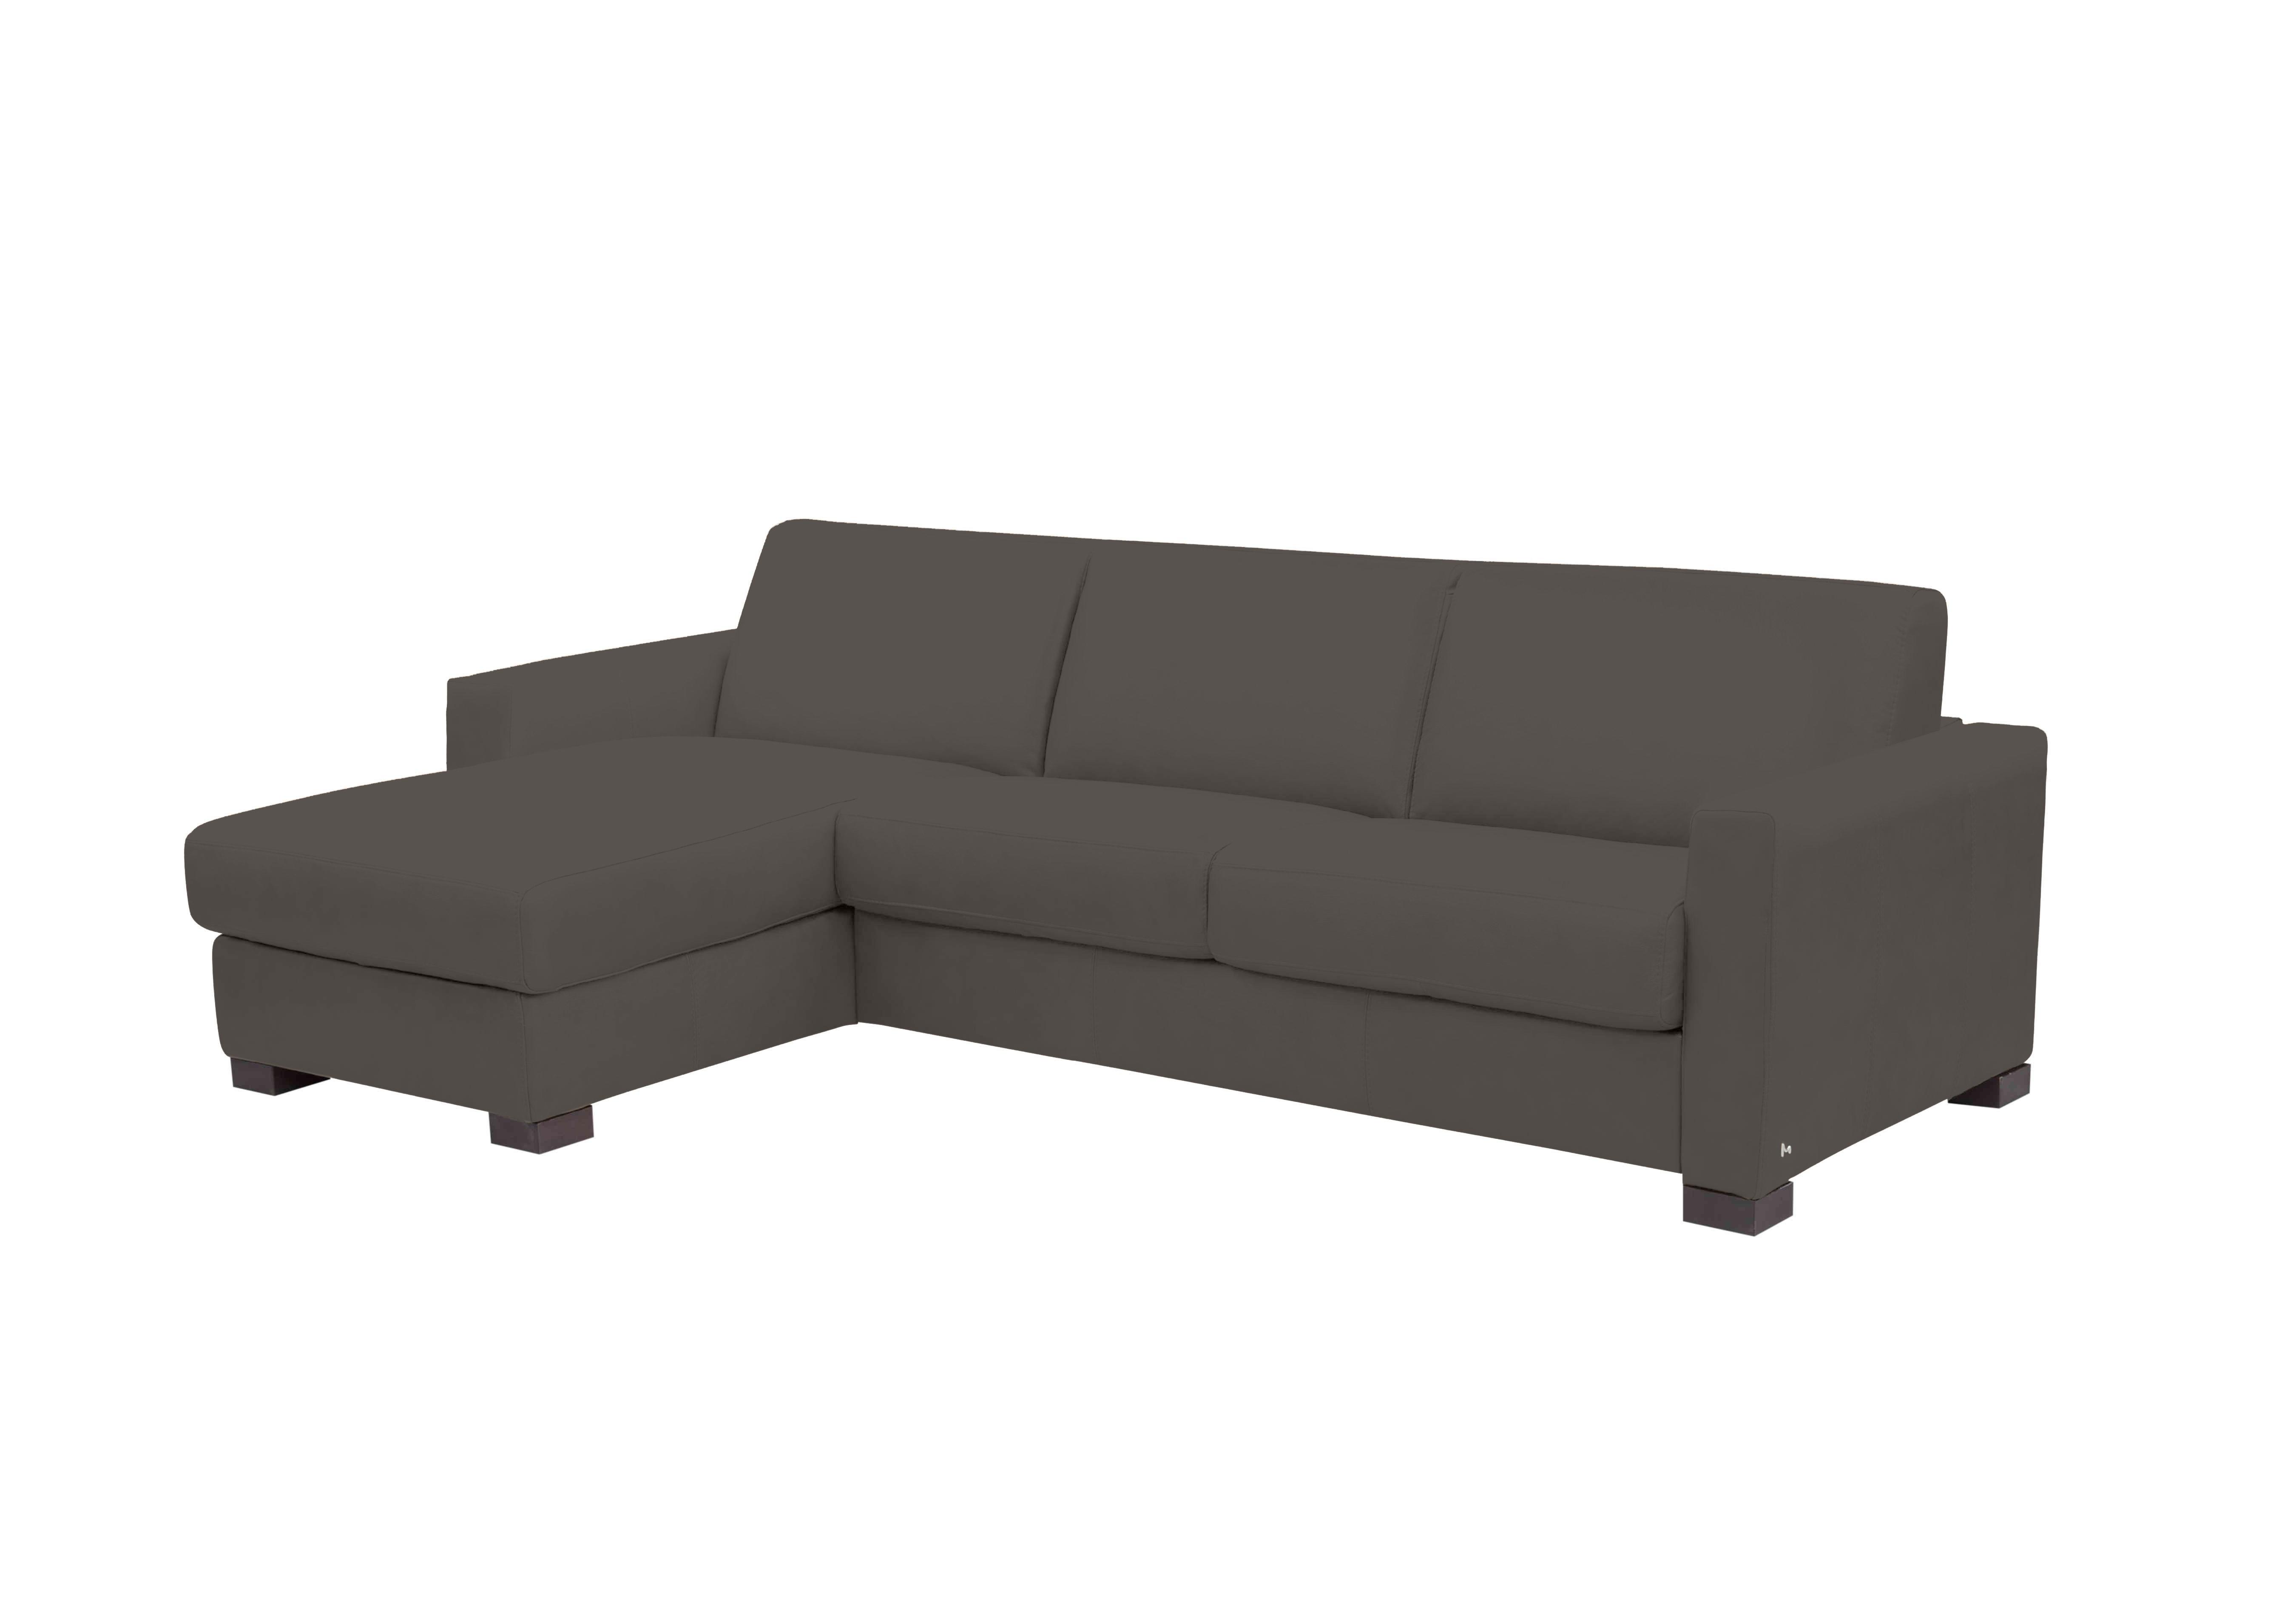 Alcova 3 Seater Leather Sofa Bed with Storage Chaise and Box Arms in Torello Grigio Scuro 327 on Furniture Village